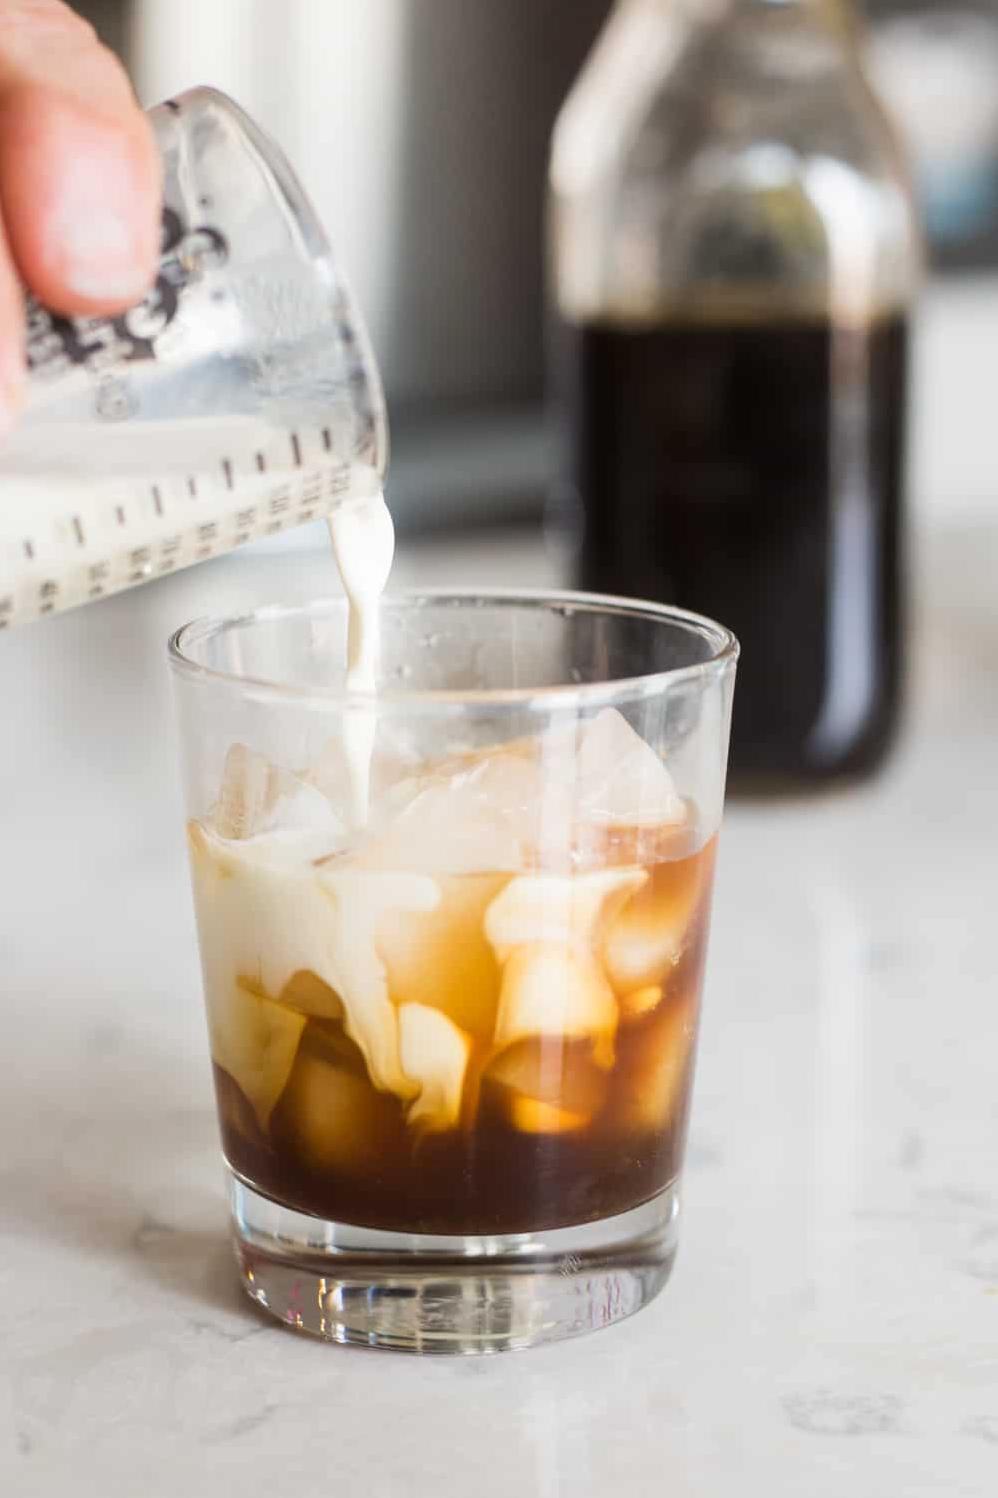  Your new favorite homemade liqueur: coffee liqueur that tastes like Kahlua! ☕🍹